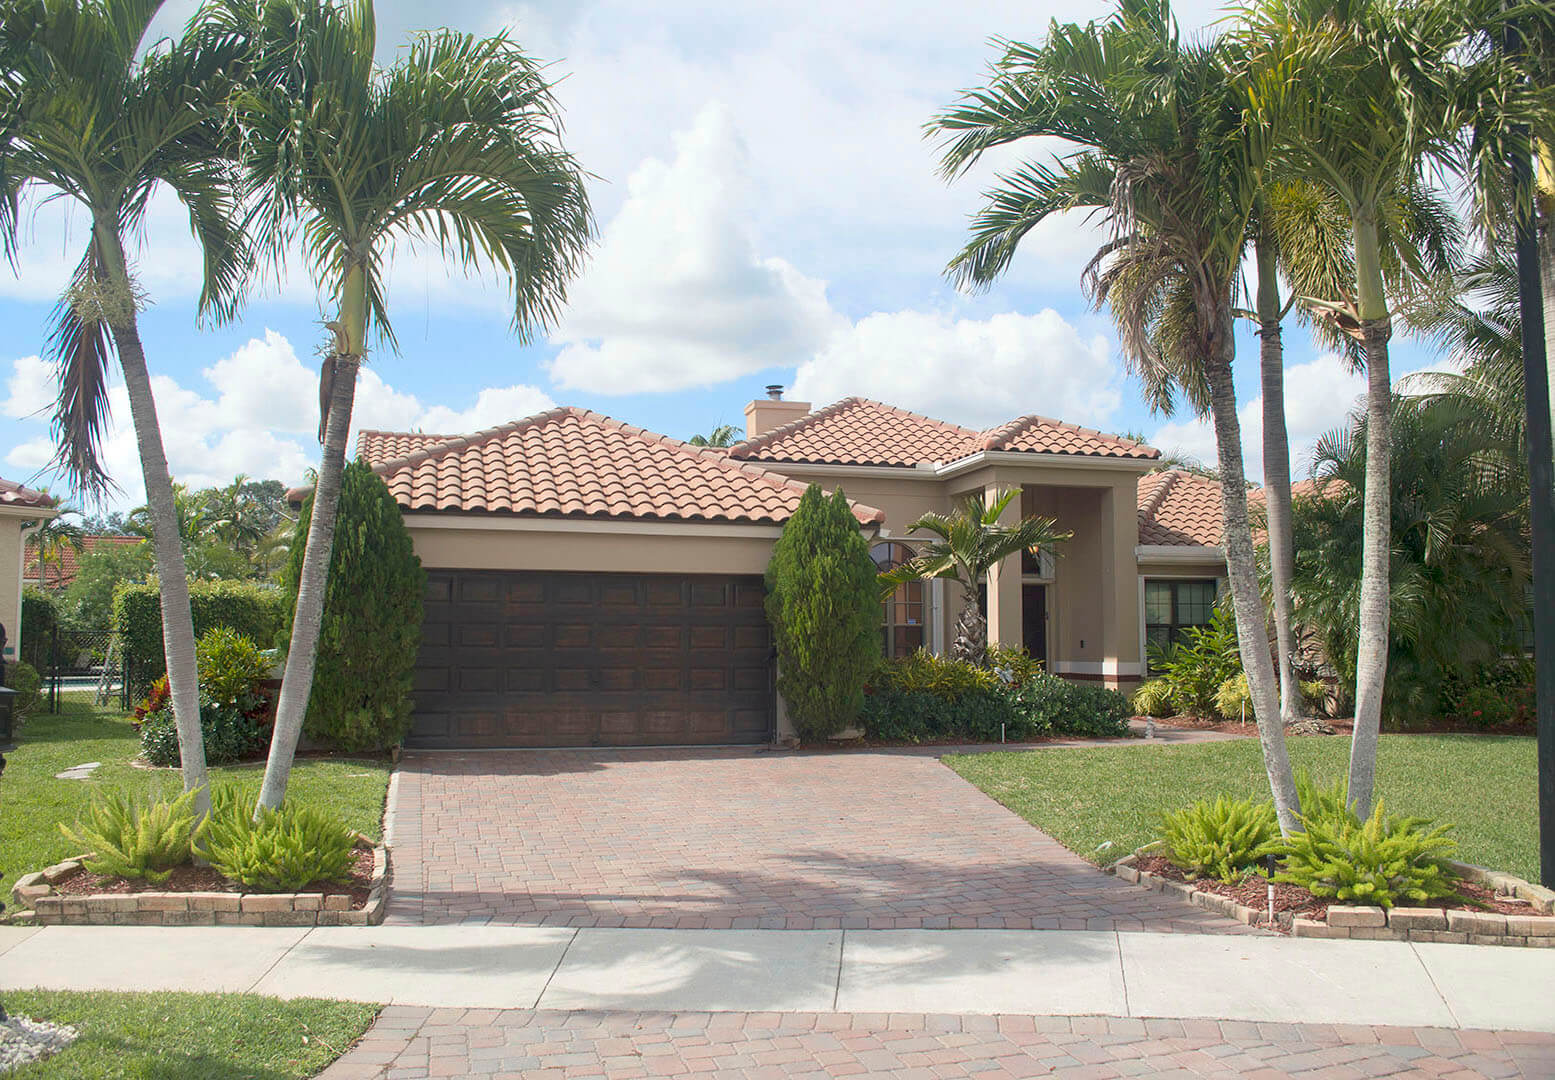 House Facade for 9651 Ridgeside Ct, Davie, FL 33328 © Flat Fee Florida Realty